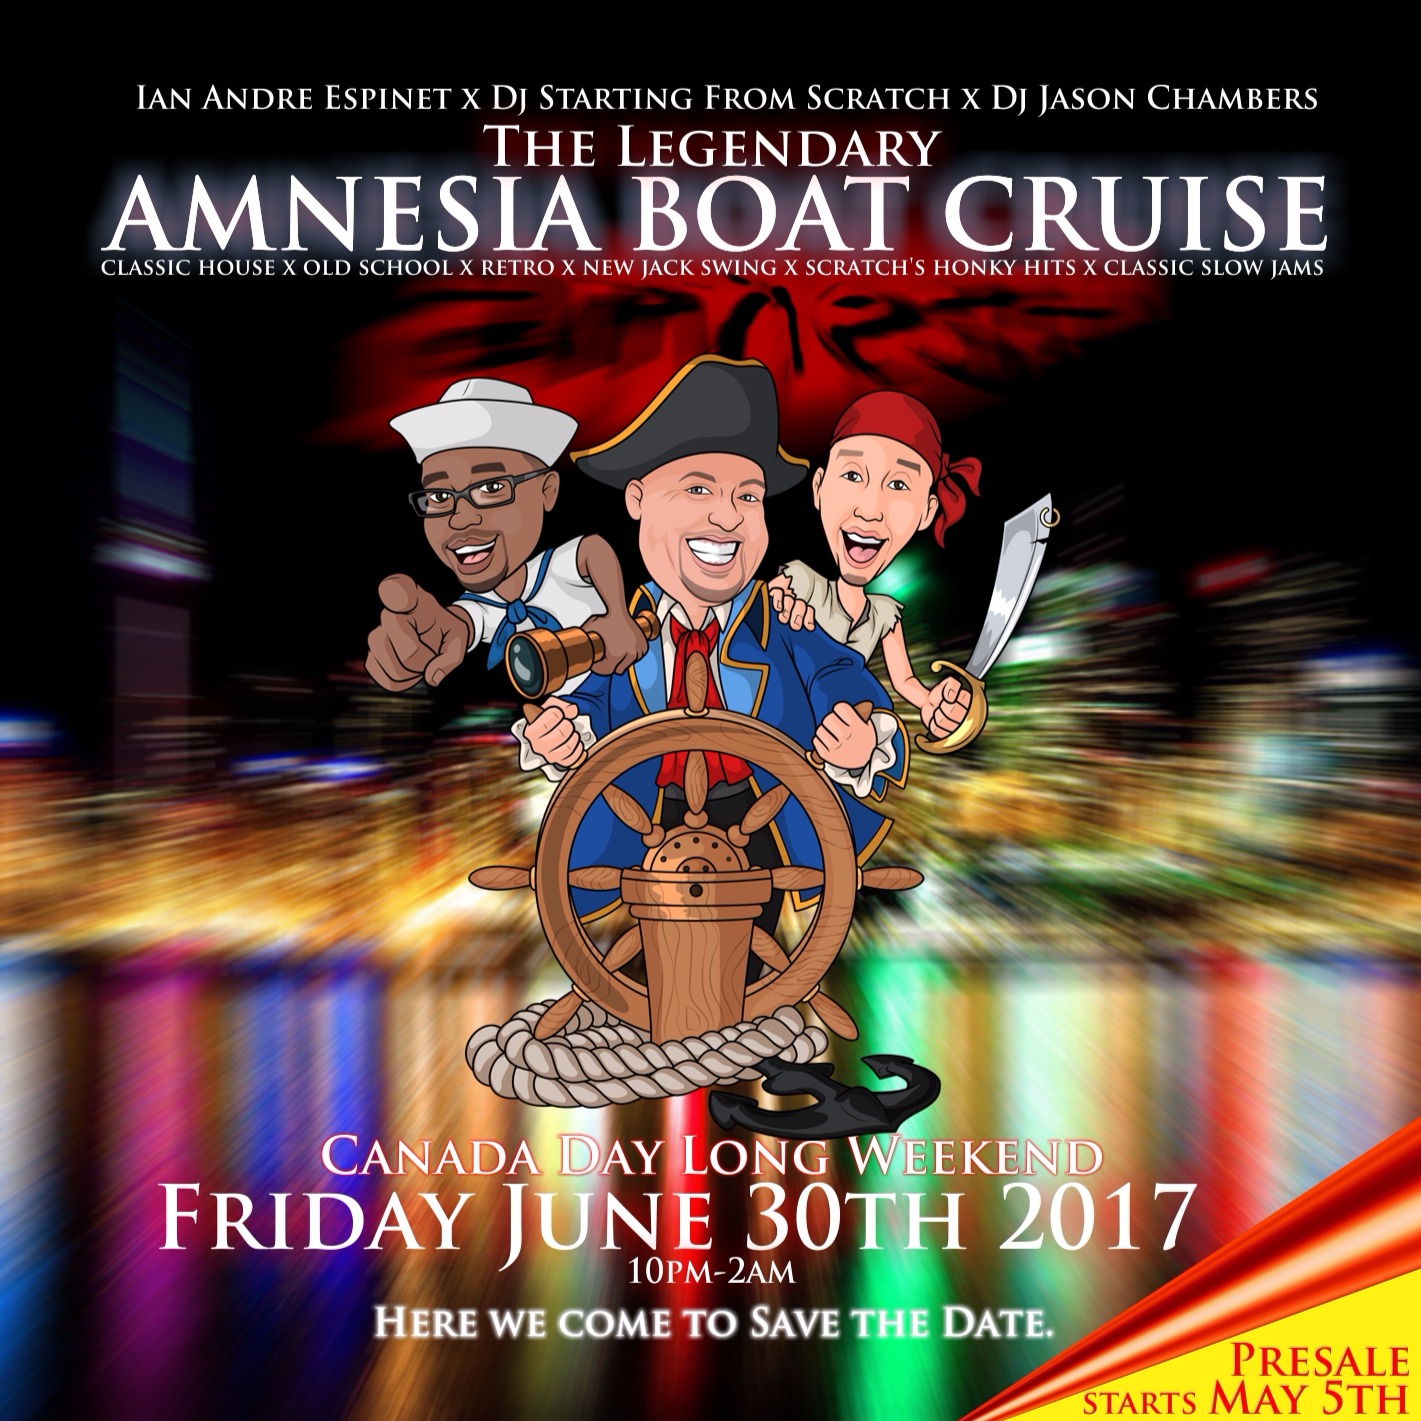 ABC: The Legendary Amnesia Boat Cruise 2017 - Canada Day Weekend Friday